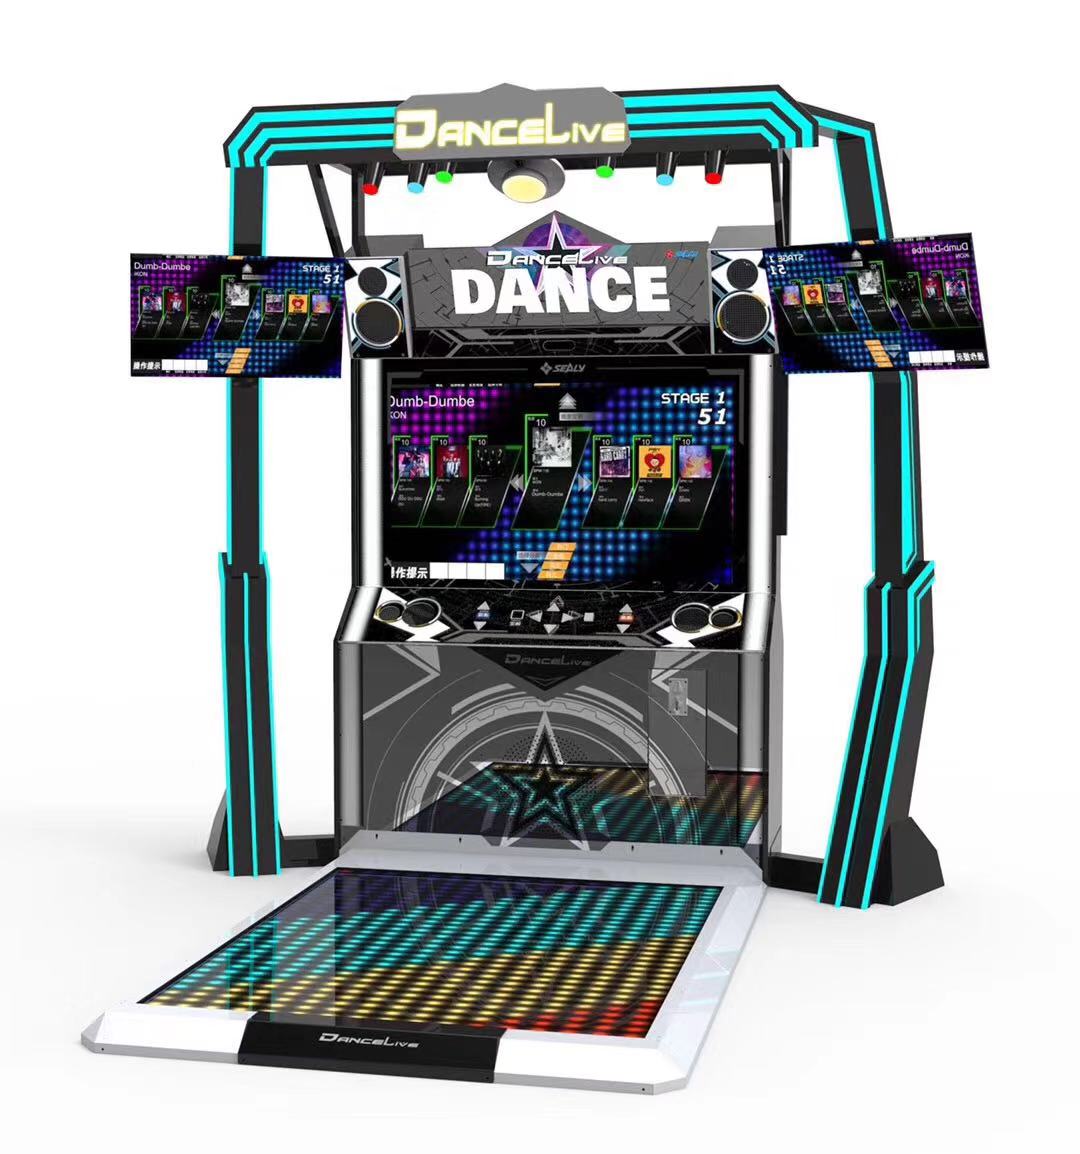 Dance Live Video Arcade Dance Game